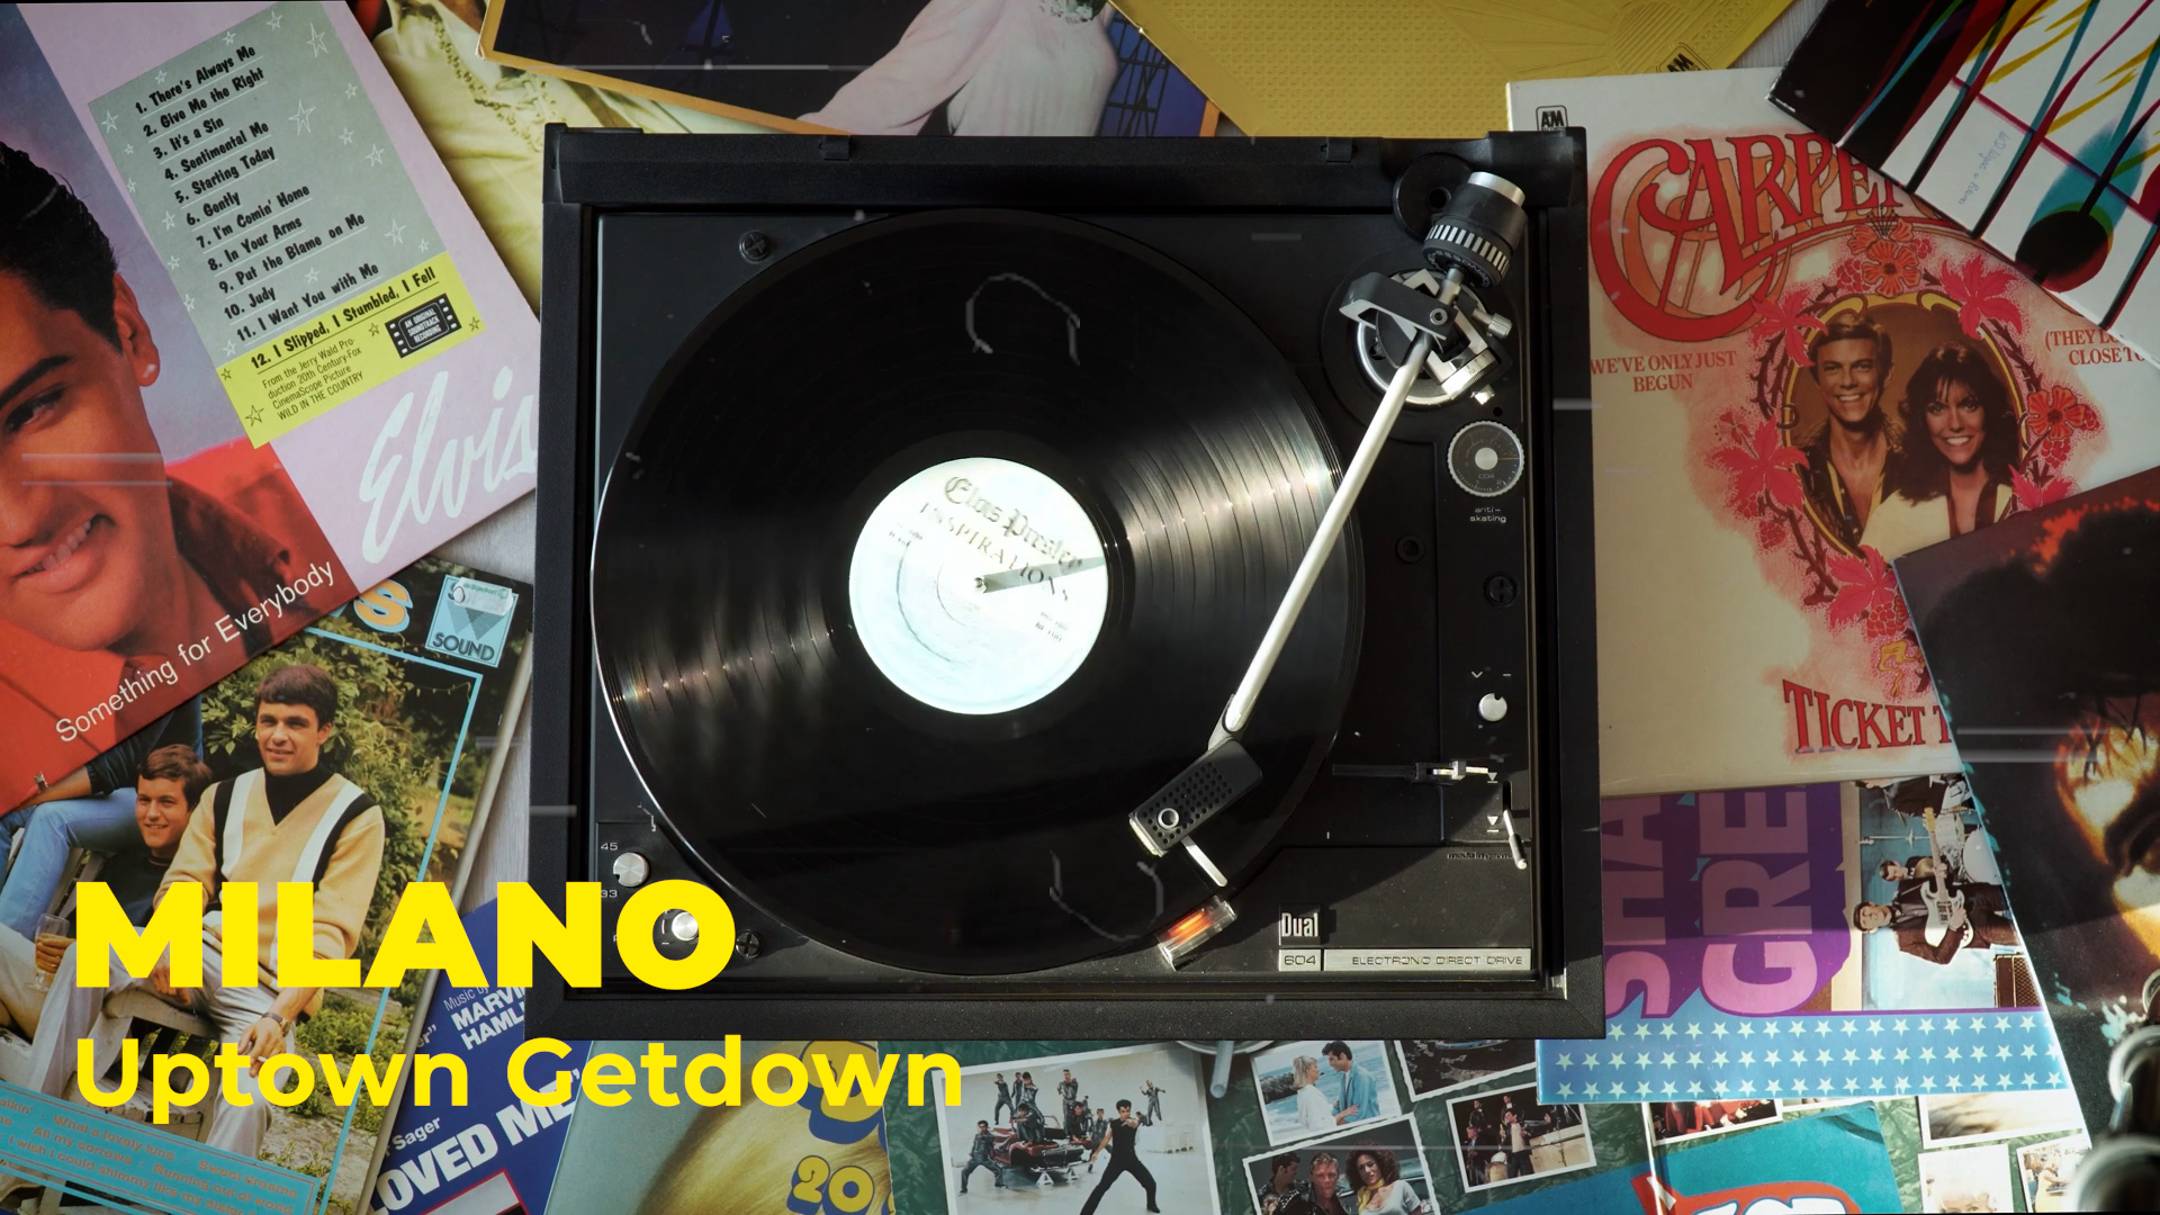 MILANO - Uptown Getdown (Electronic,Pop,Funk)
Музыка без авторских прав
No Copyright Music